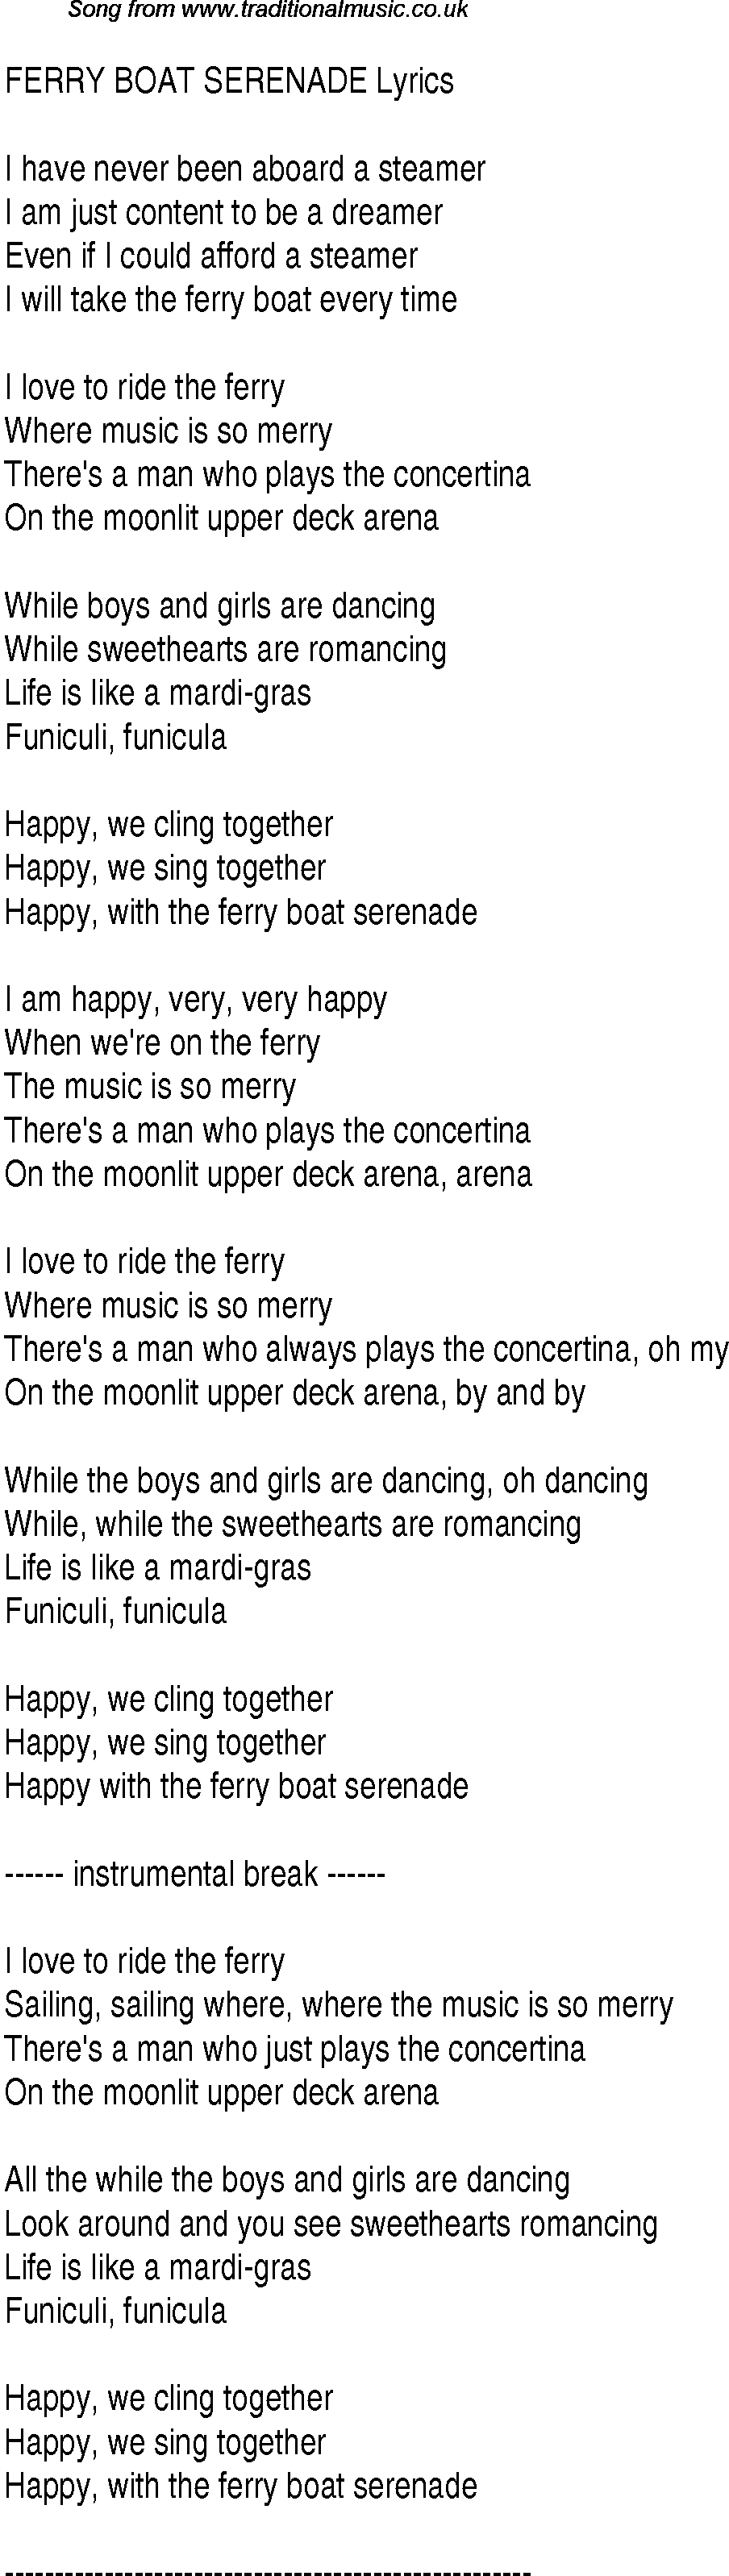 1940s top songs - lyrics for Ferry Boat Serenade(Andrews Sisters)